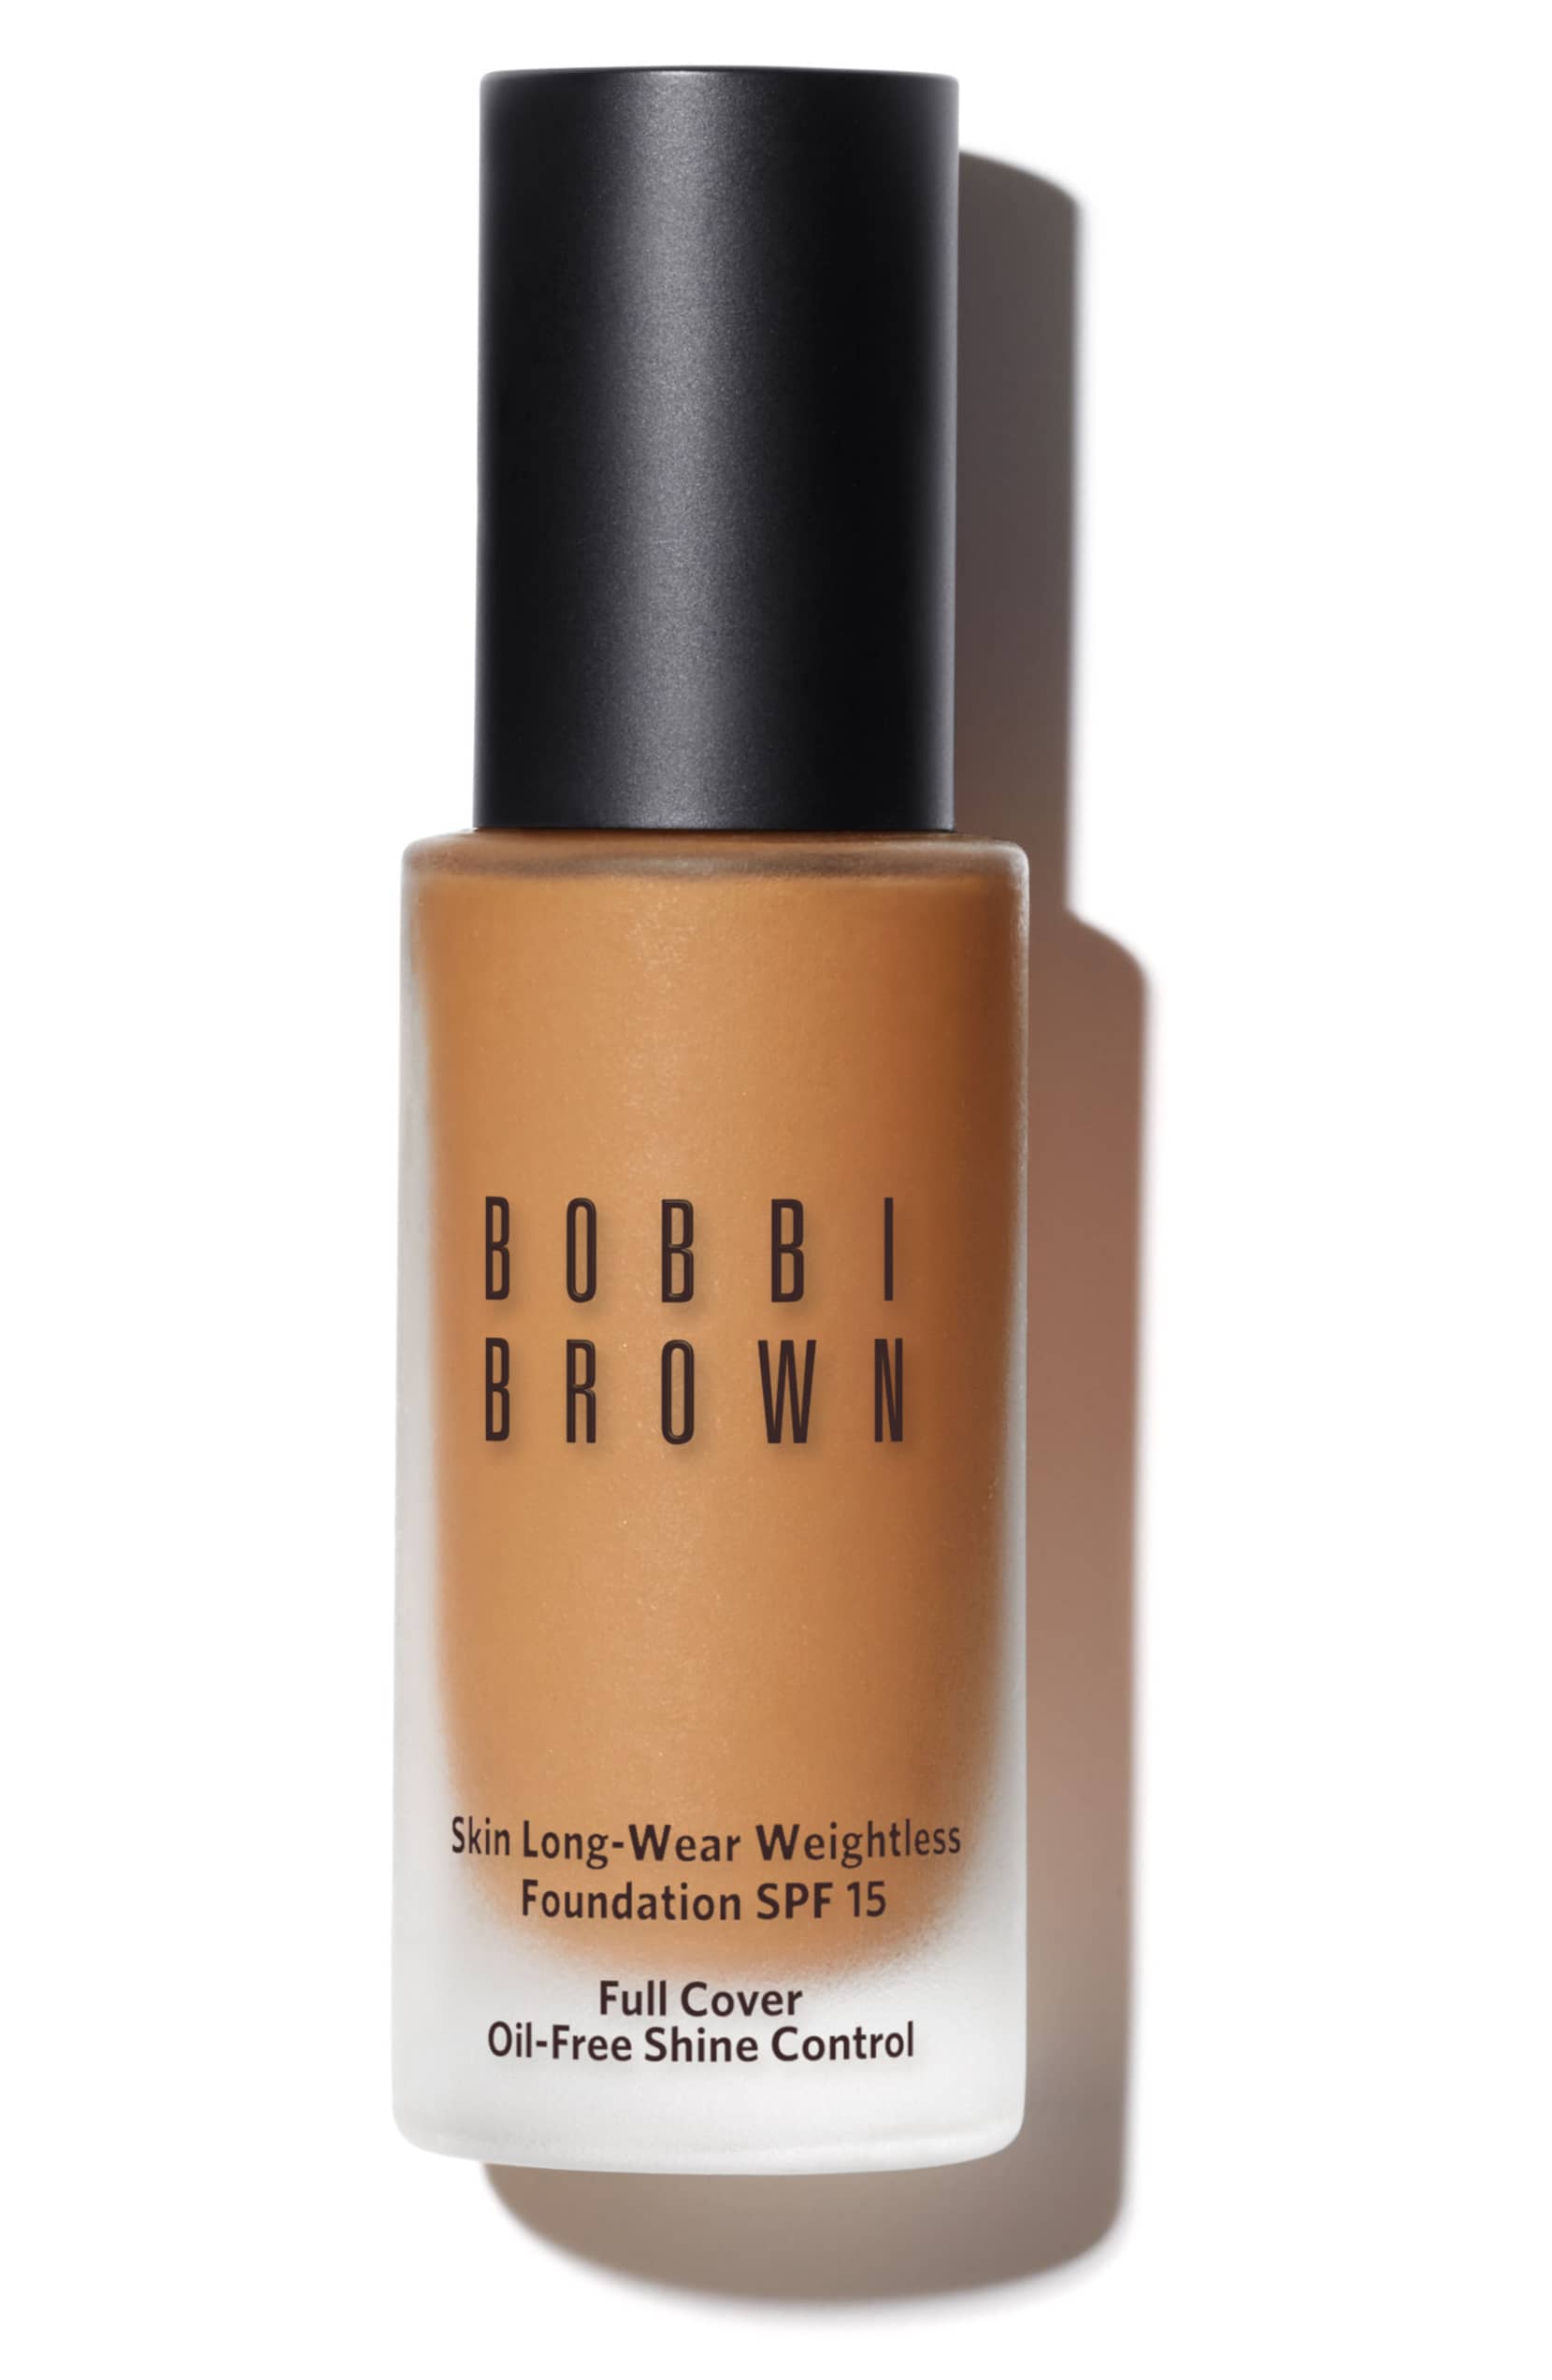 Bobbi Brown Skin Long-Wear Weightless Foundation SPF 15